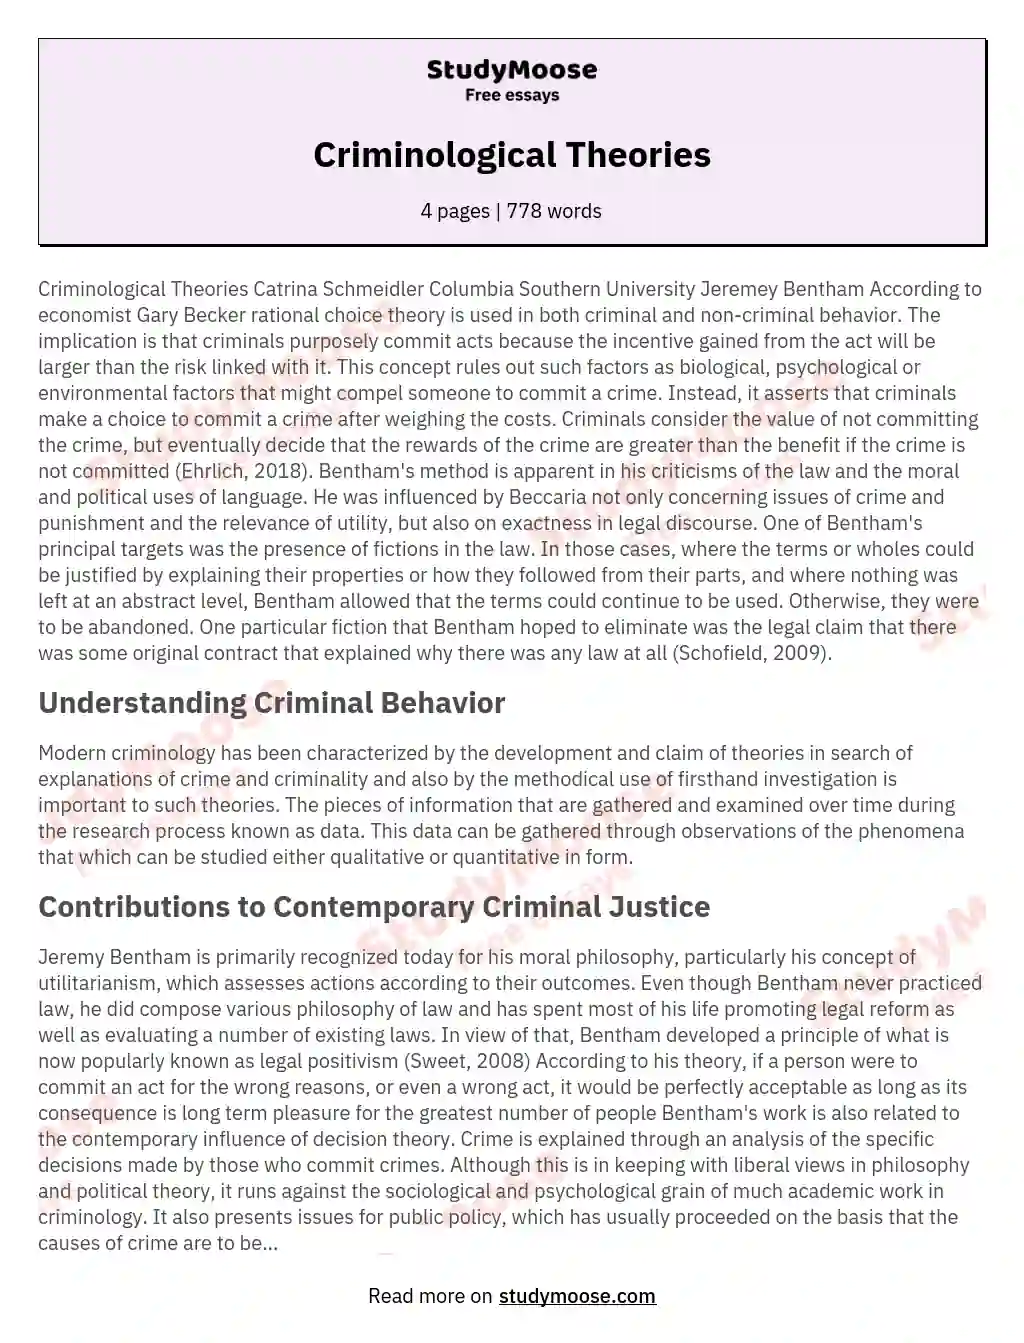 Criminological Theories essay